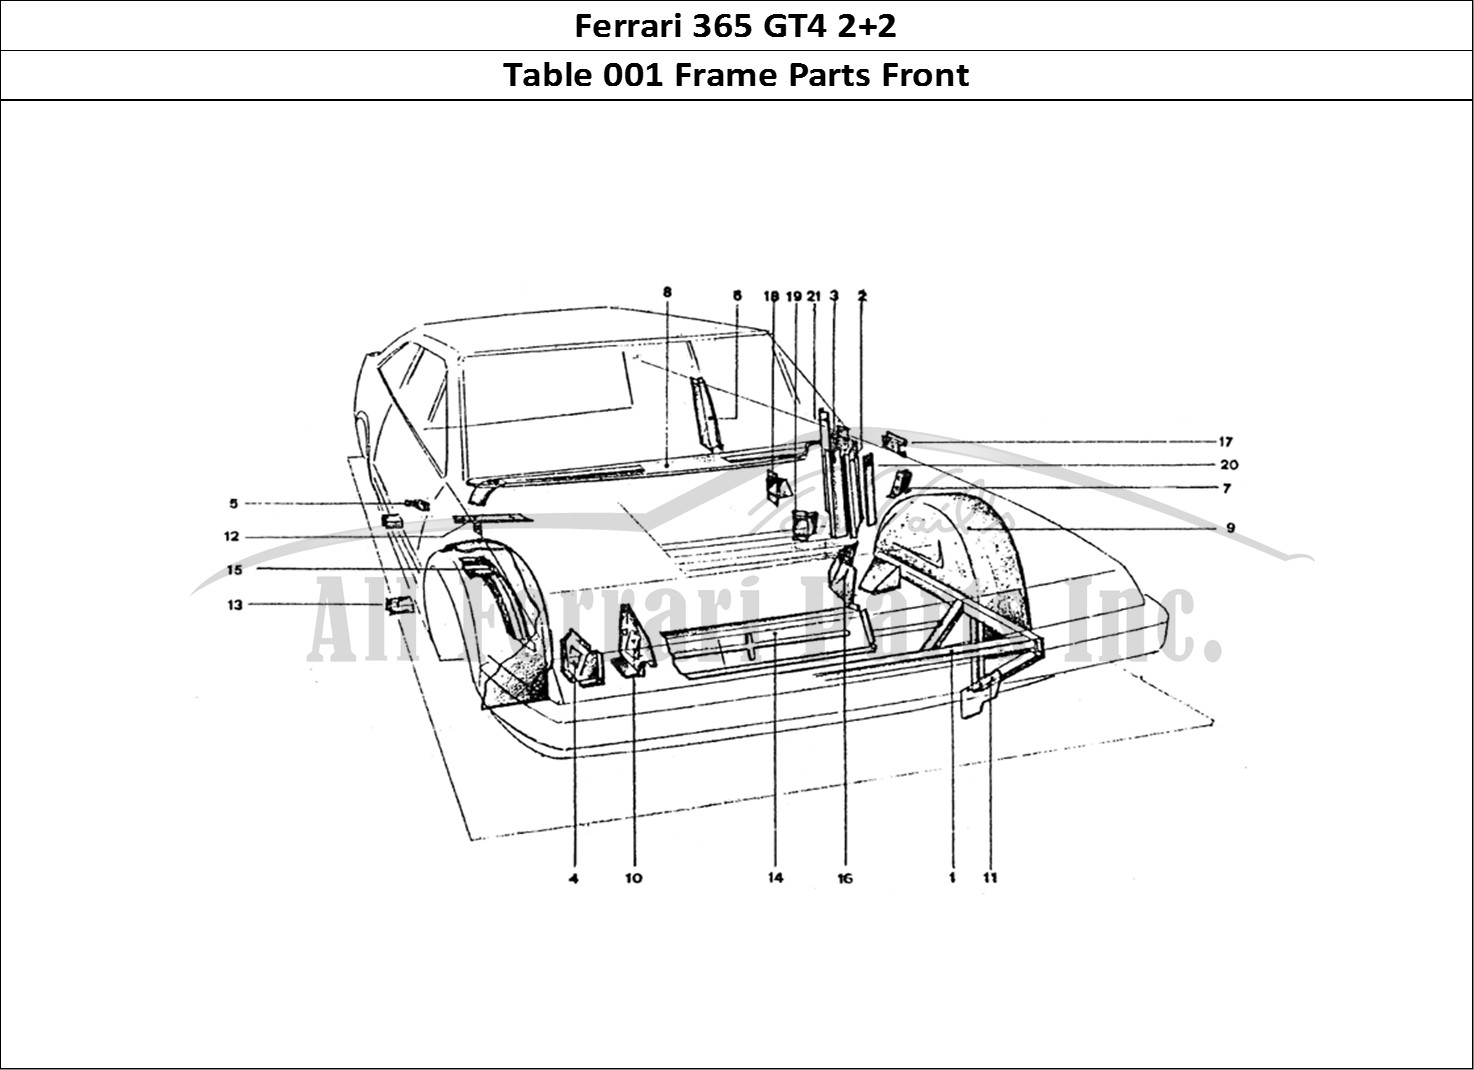 Ferrari Parts Ferrari 365 GT4 2+2 Coachwork Page 001 Front Inner sheilds & Pan